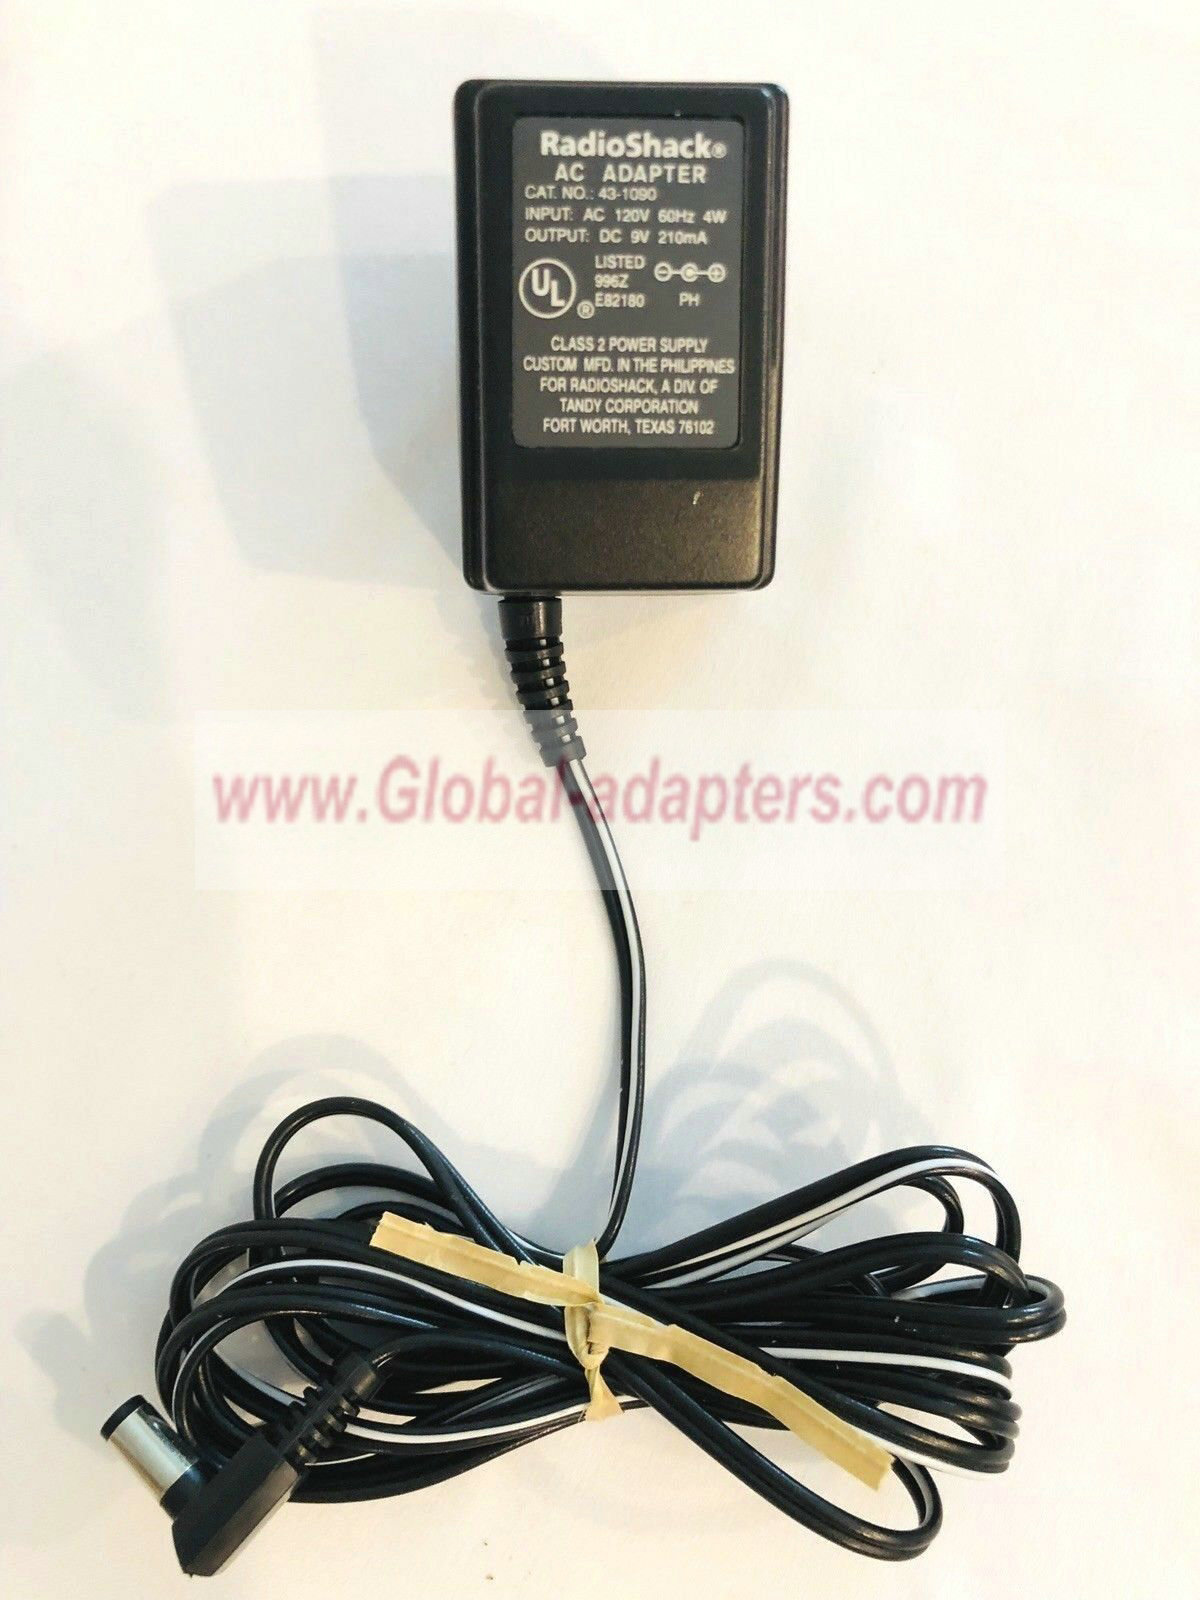 NEW 9V 210mA RadioShack 43-1090 AC DC Power Supply Adapter - Click Image to Close